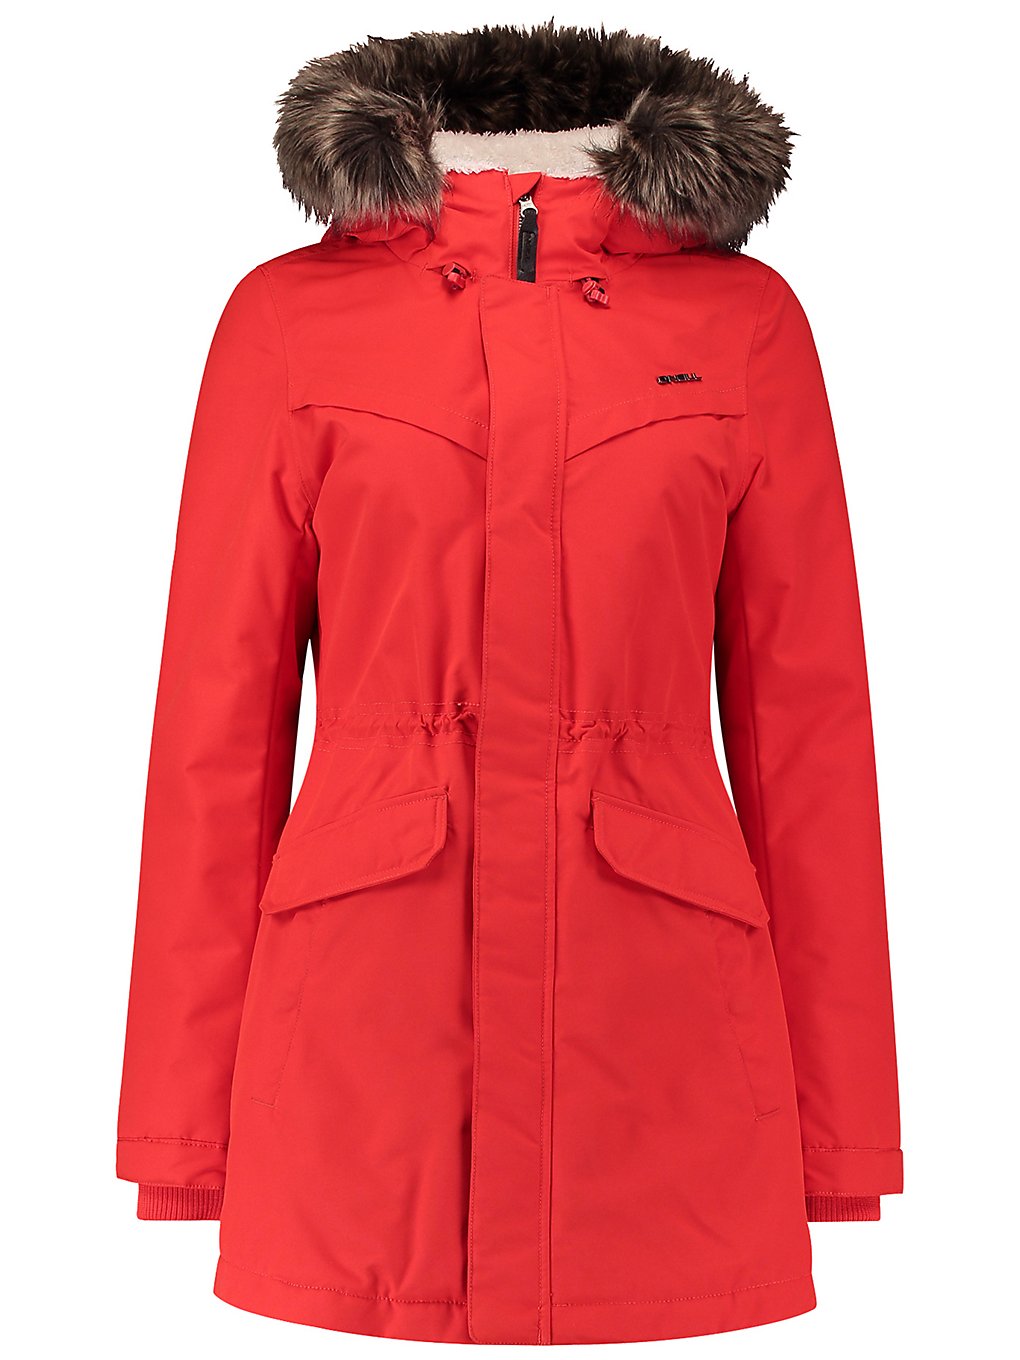 O'Neill Journey Jacket fiery red kaufen